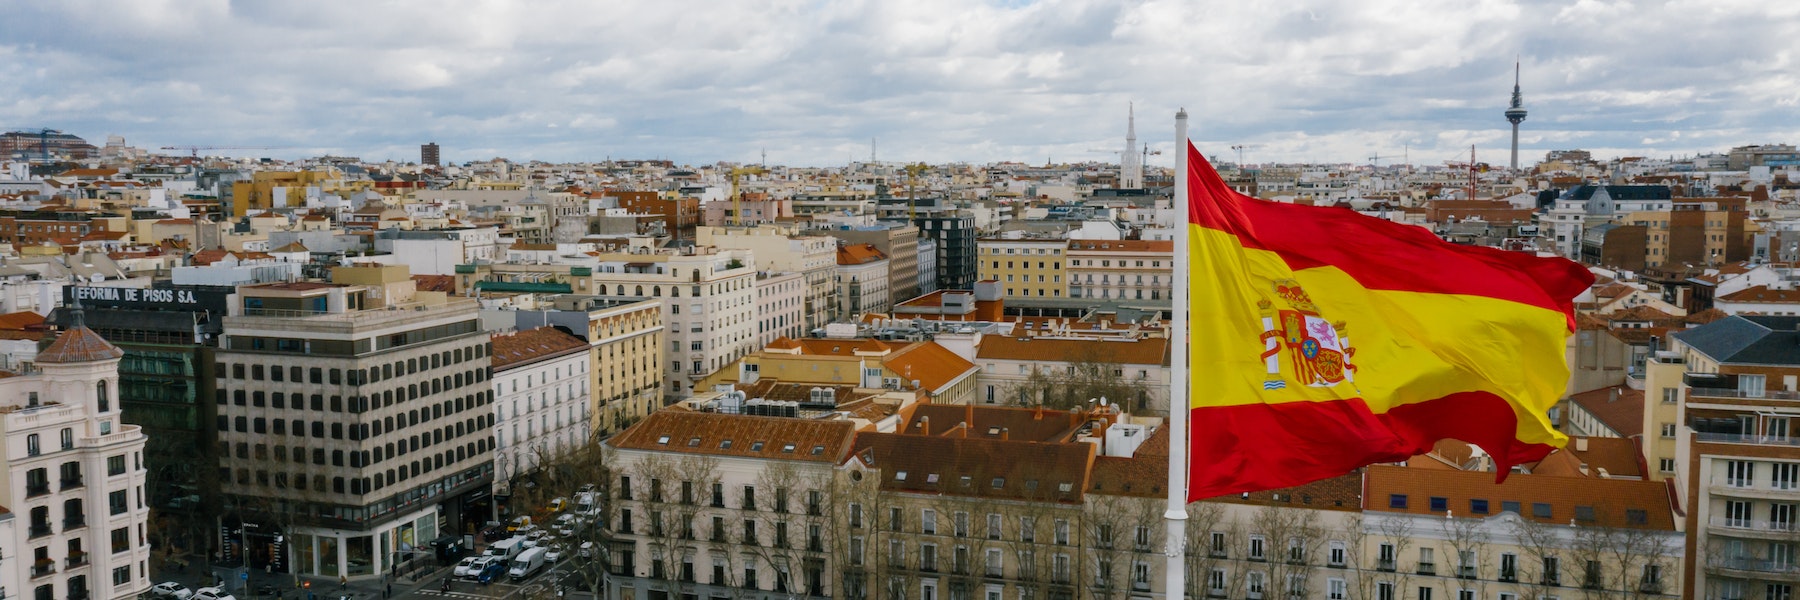 Spanish flag fluttering above a city